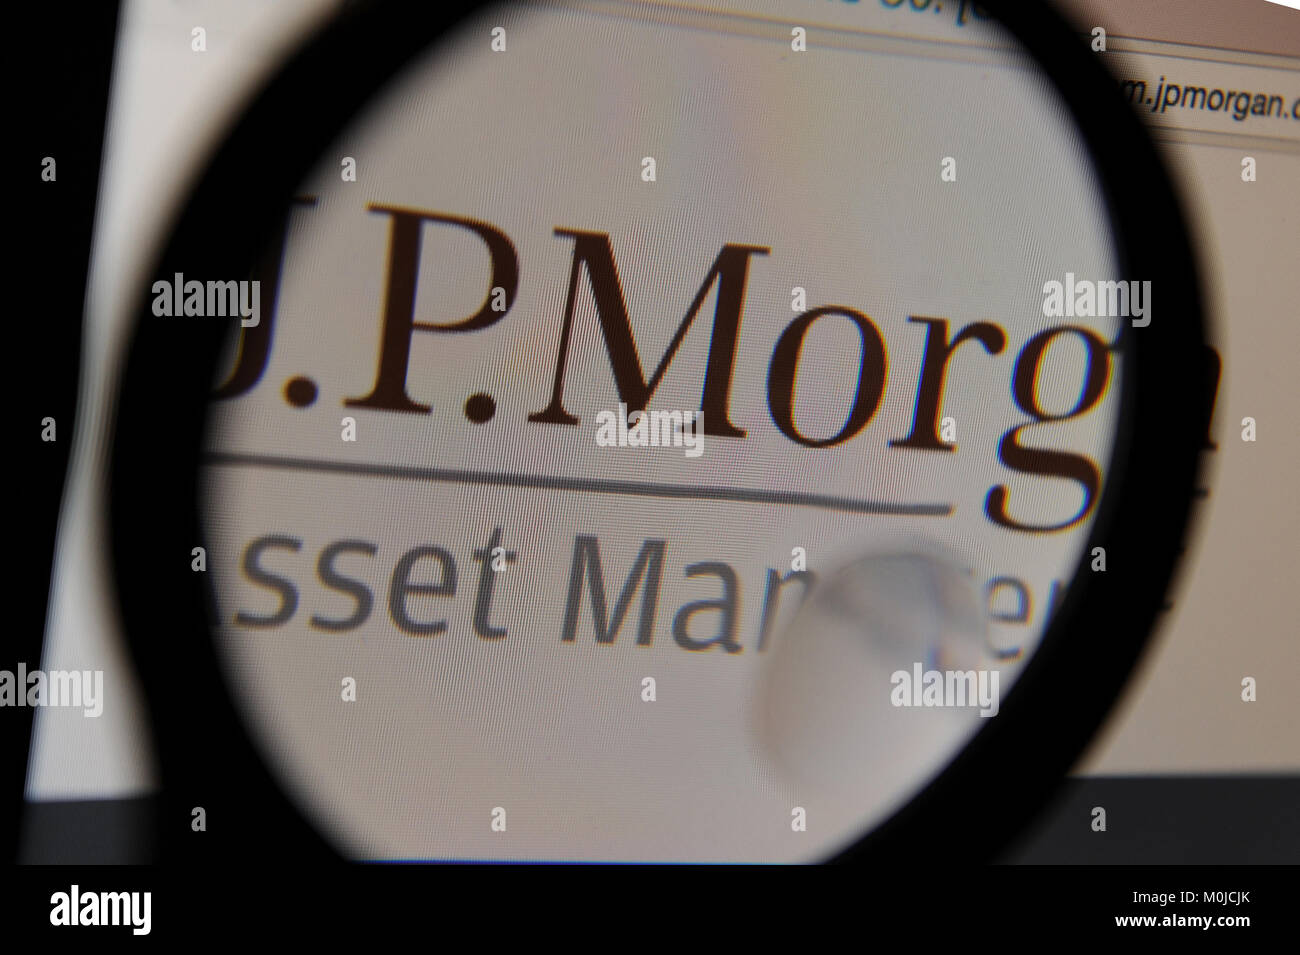 JP Morgan Stock Photo